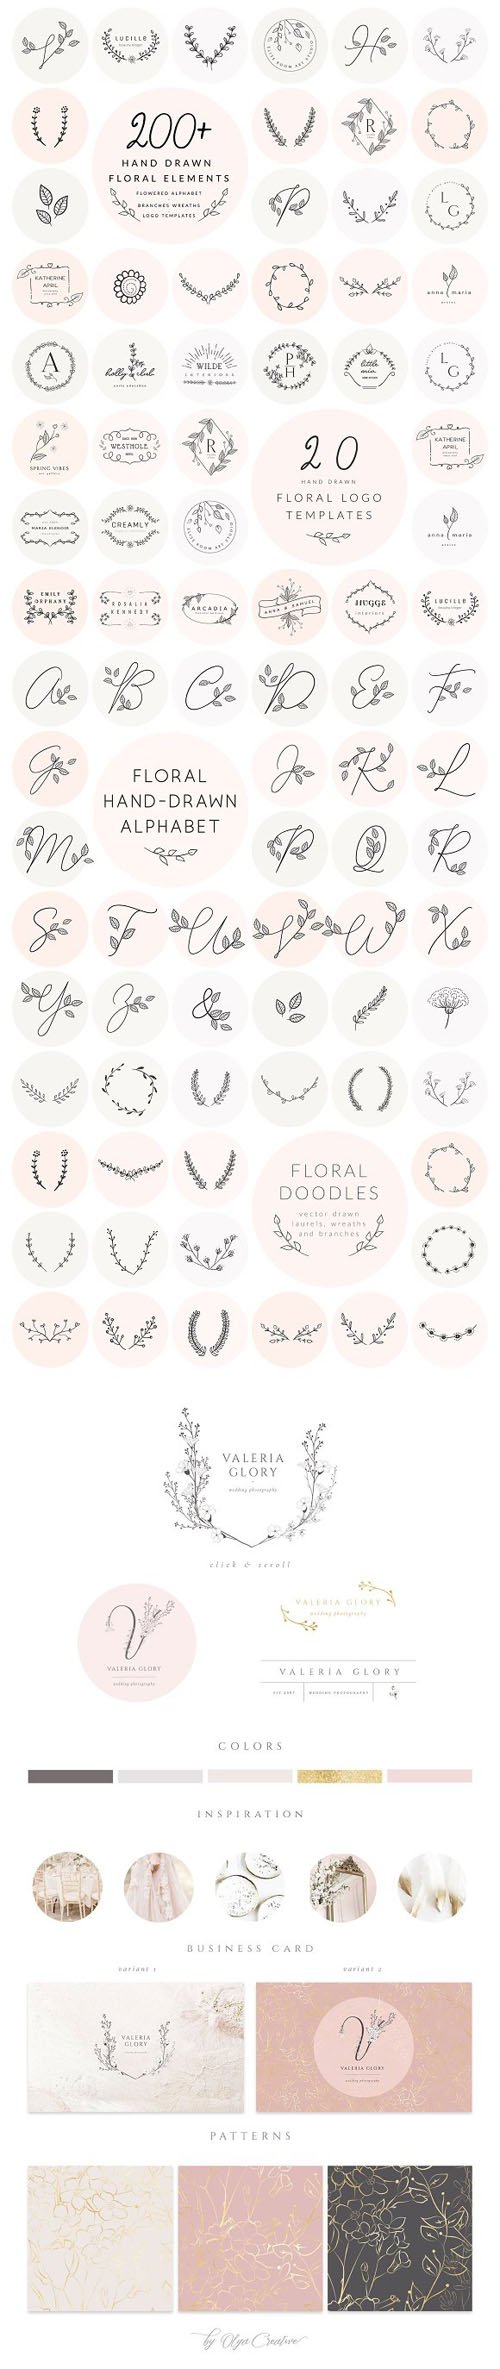 Line Art Bundle - Floral Graphic Templates - 12 Sets IN 1